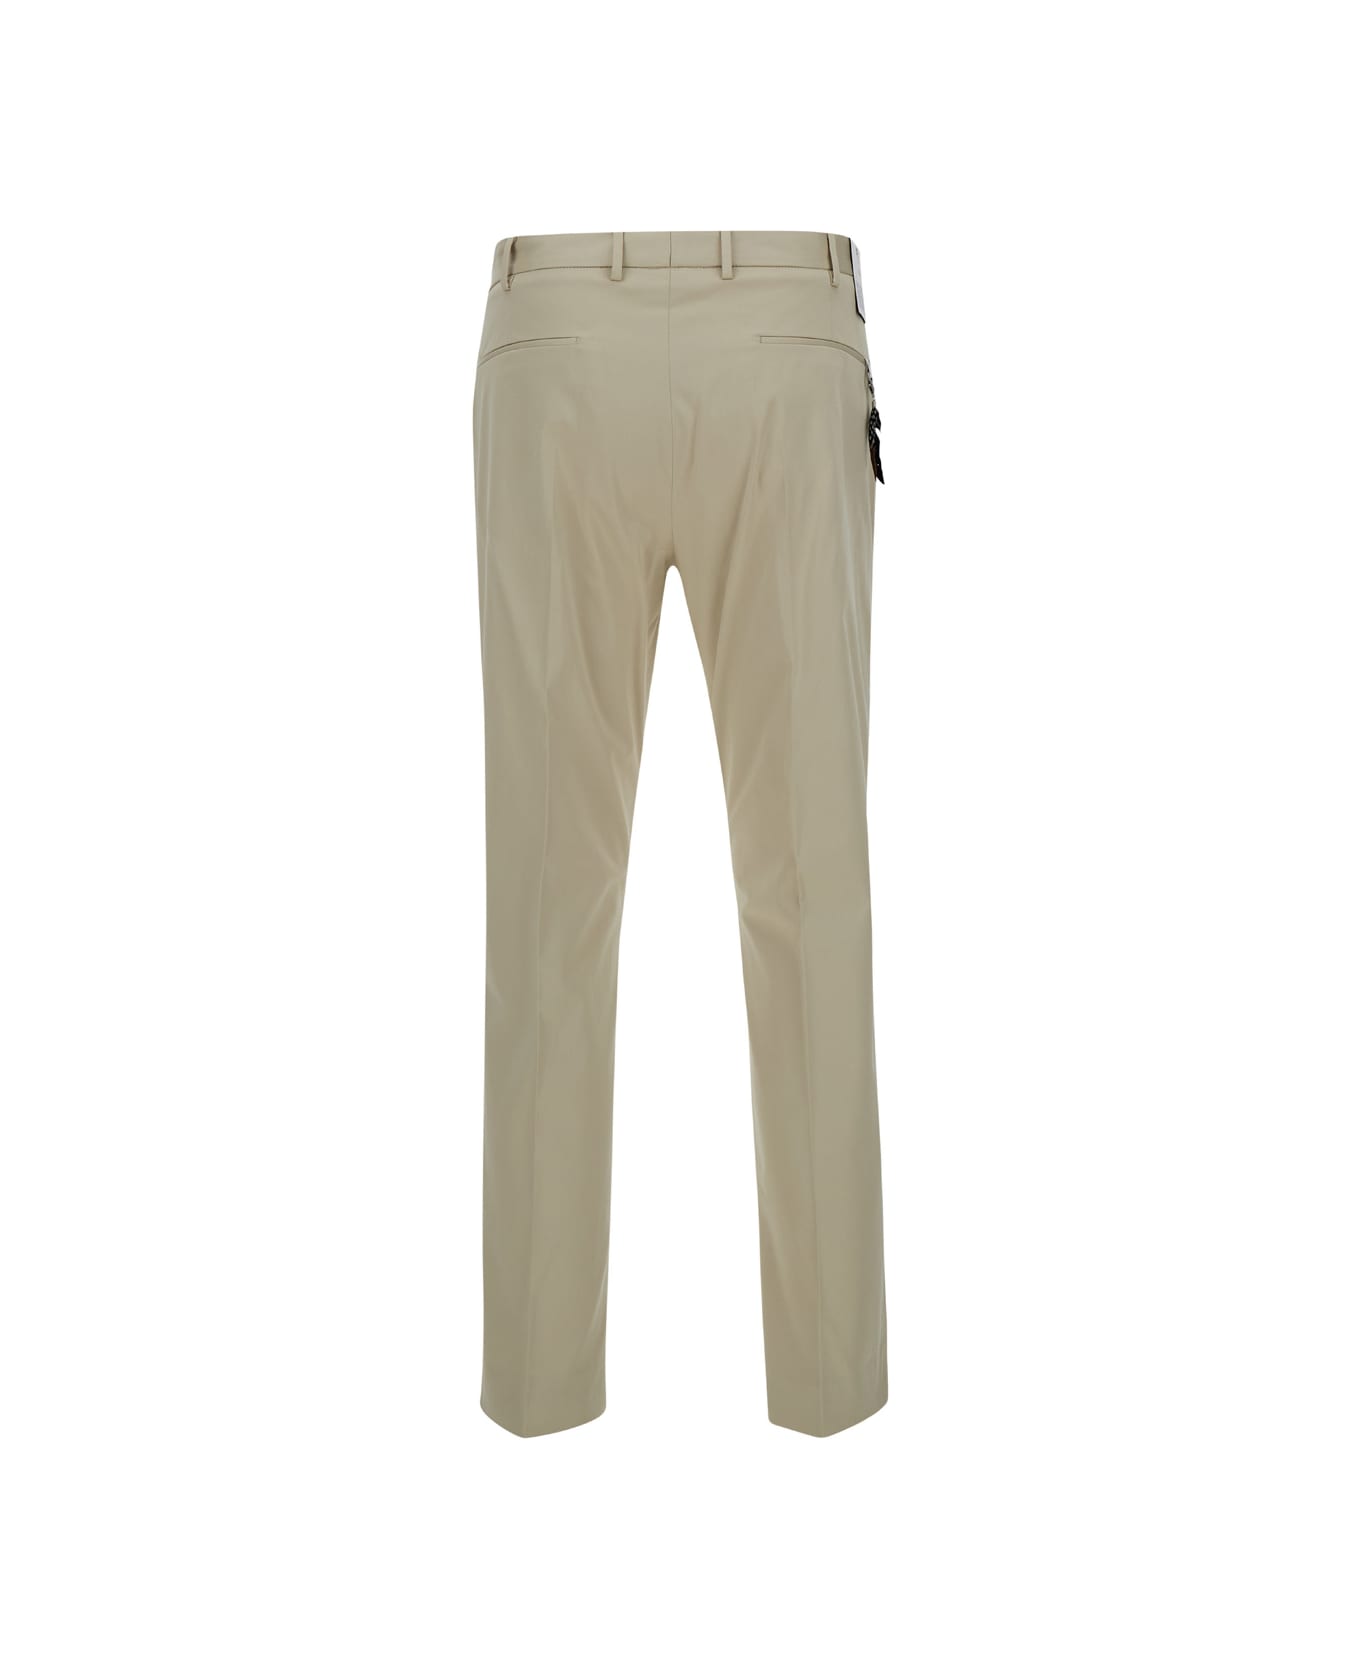 PT01 Beige Slim Fit Trousers In Cotton Blend Man - Beige ボトムス